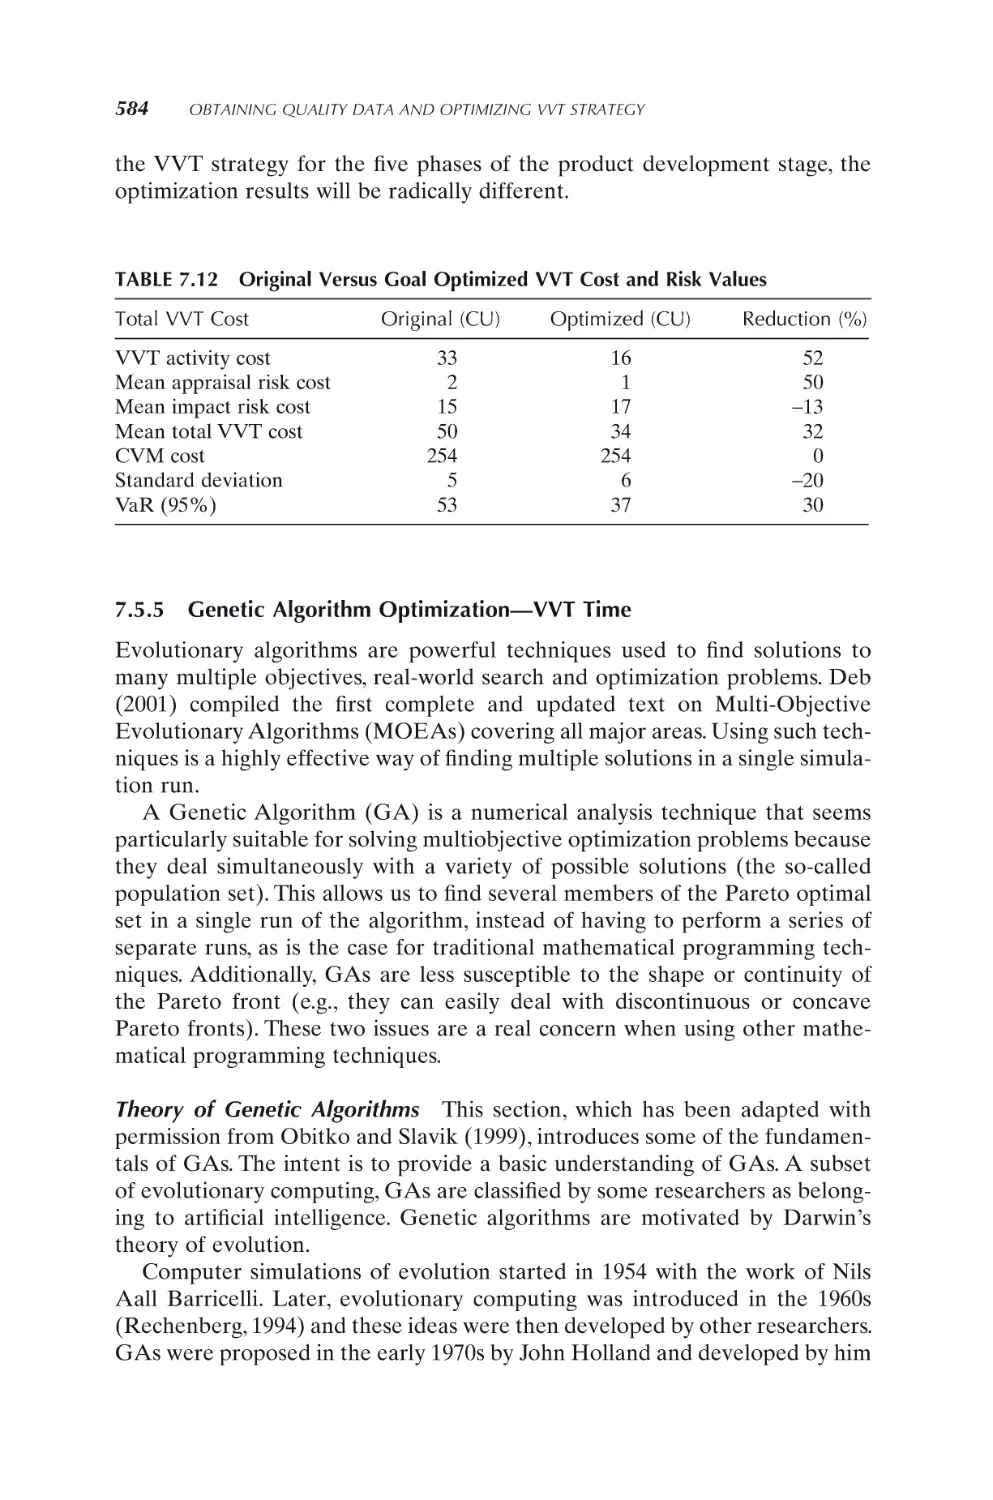 7.5.5 Genetic Algorithm Optimization—VVT Time